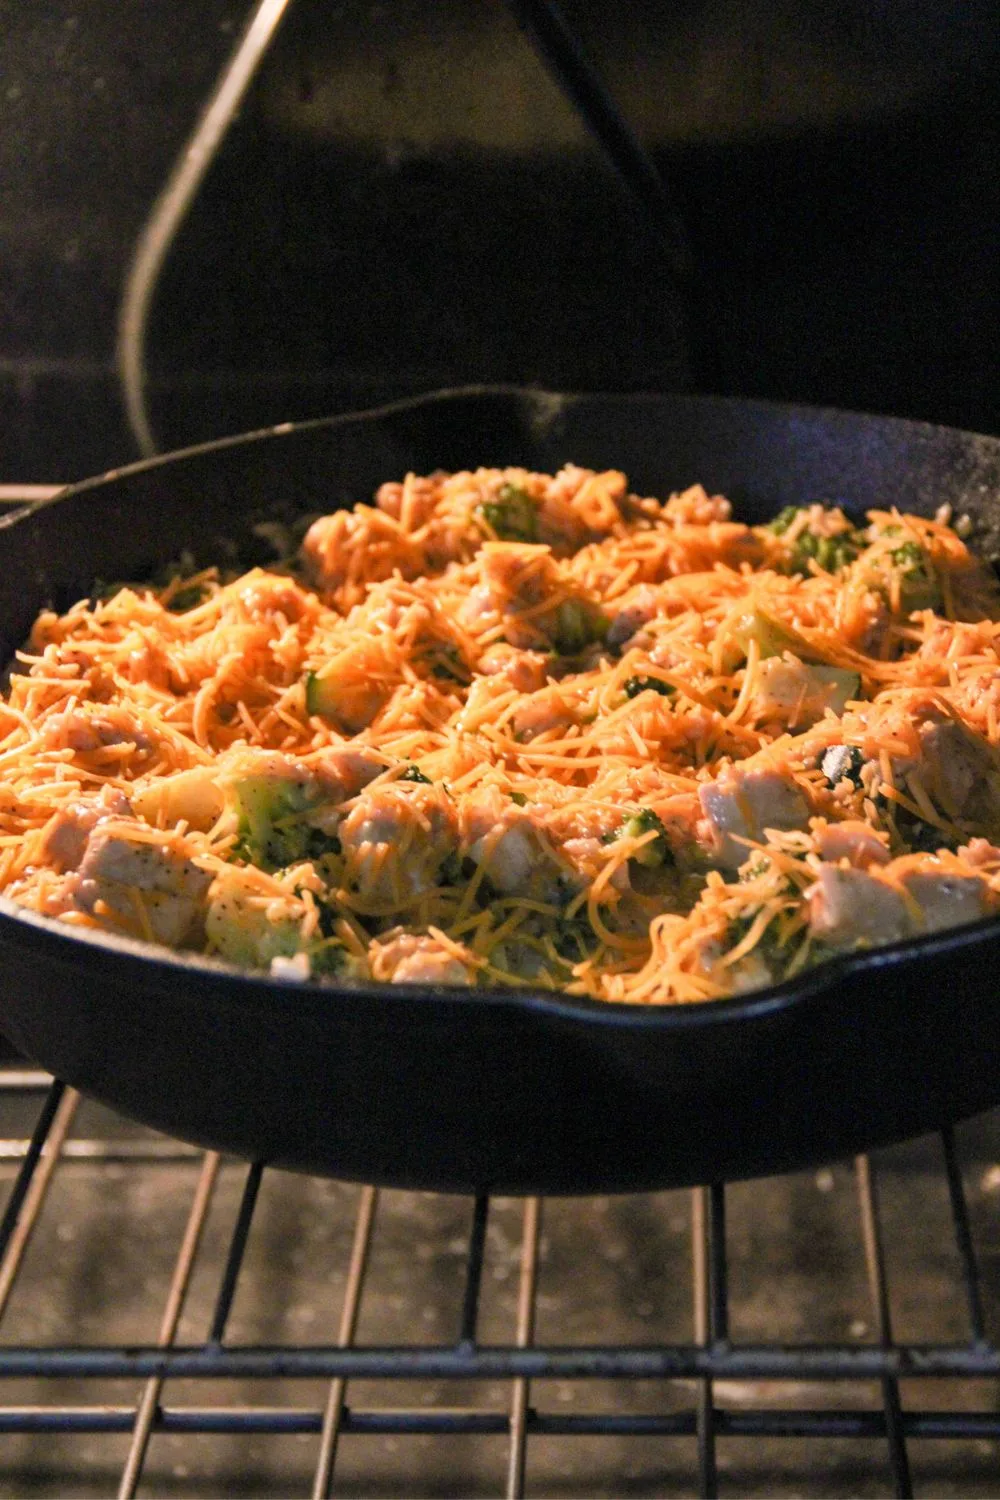 chicken broccoli casserole in the oven baking